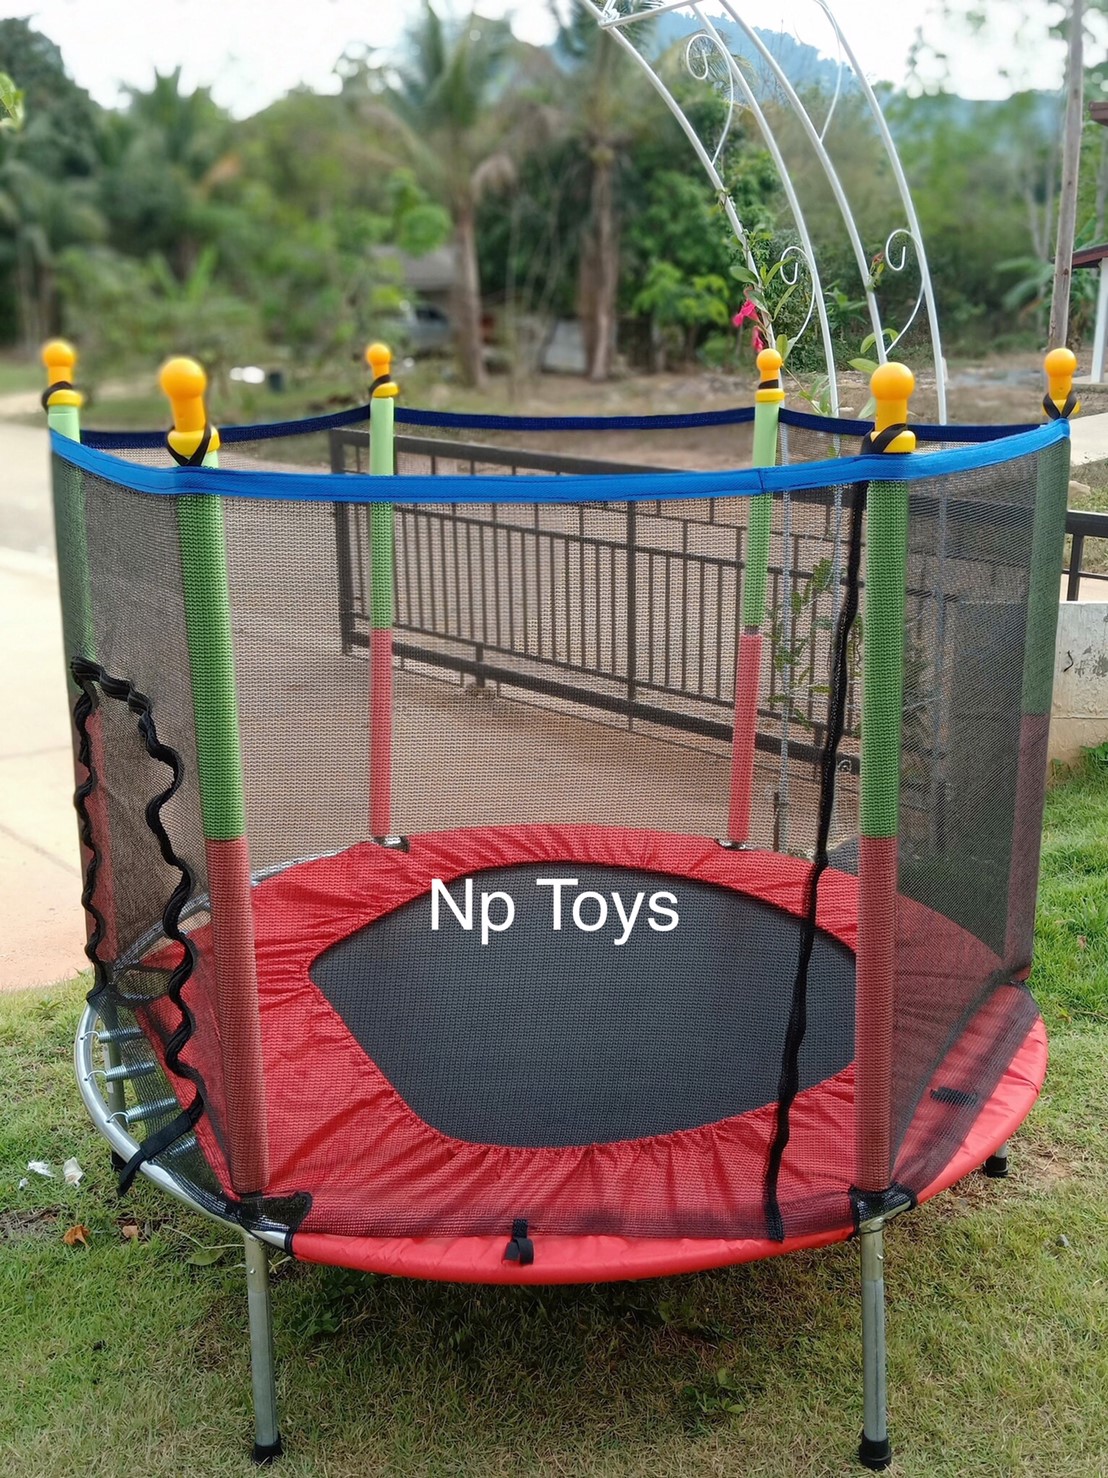 Np Toys แทรมโพลีนสำหรับเด็กกระโดดเล่น Trampoline jump หรือออกกำลังกาย (ขนาด 122 x 140 ซม.) LNX-10014